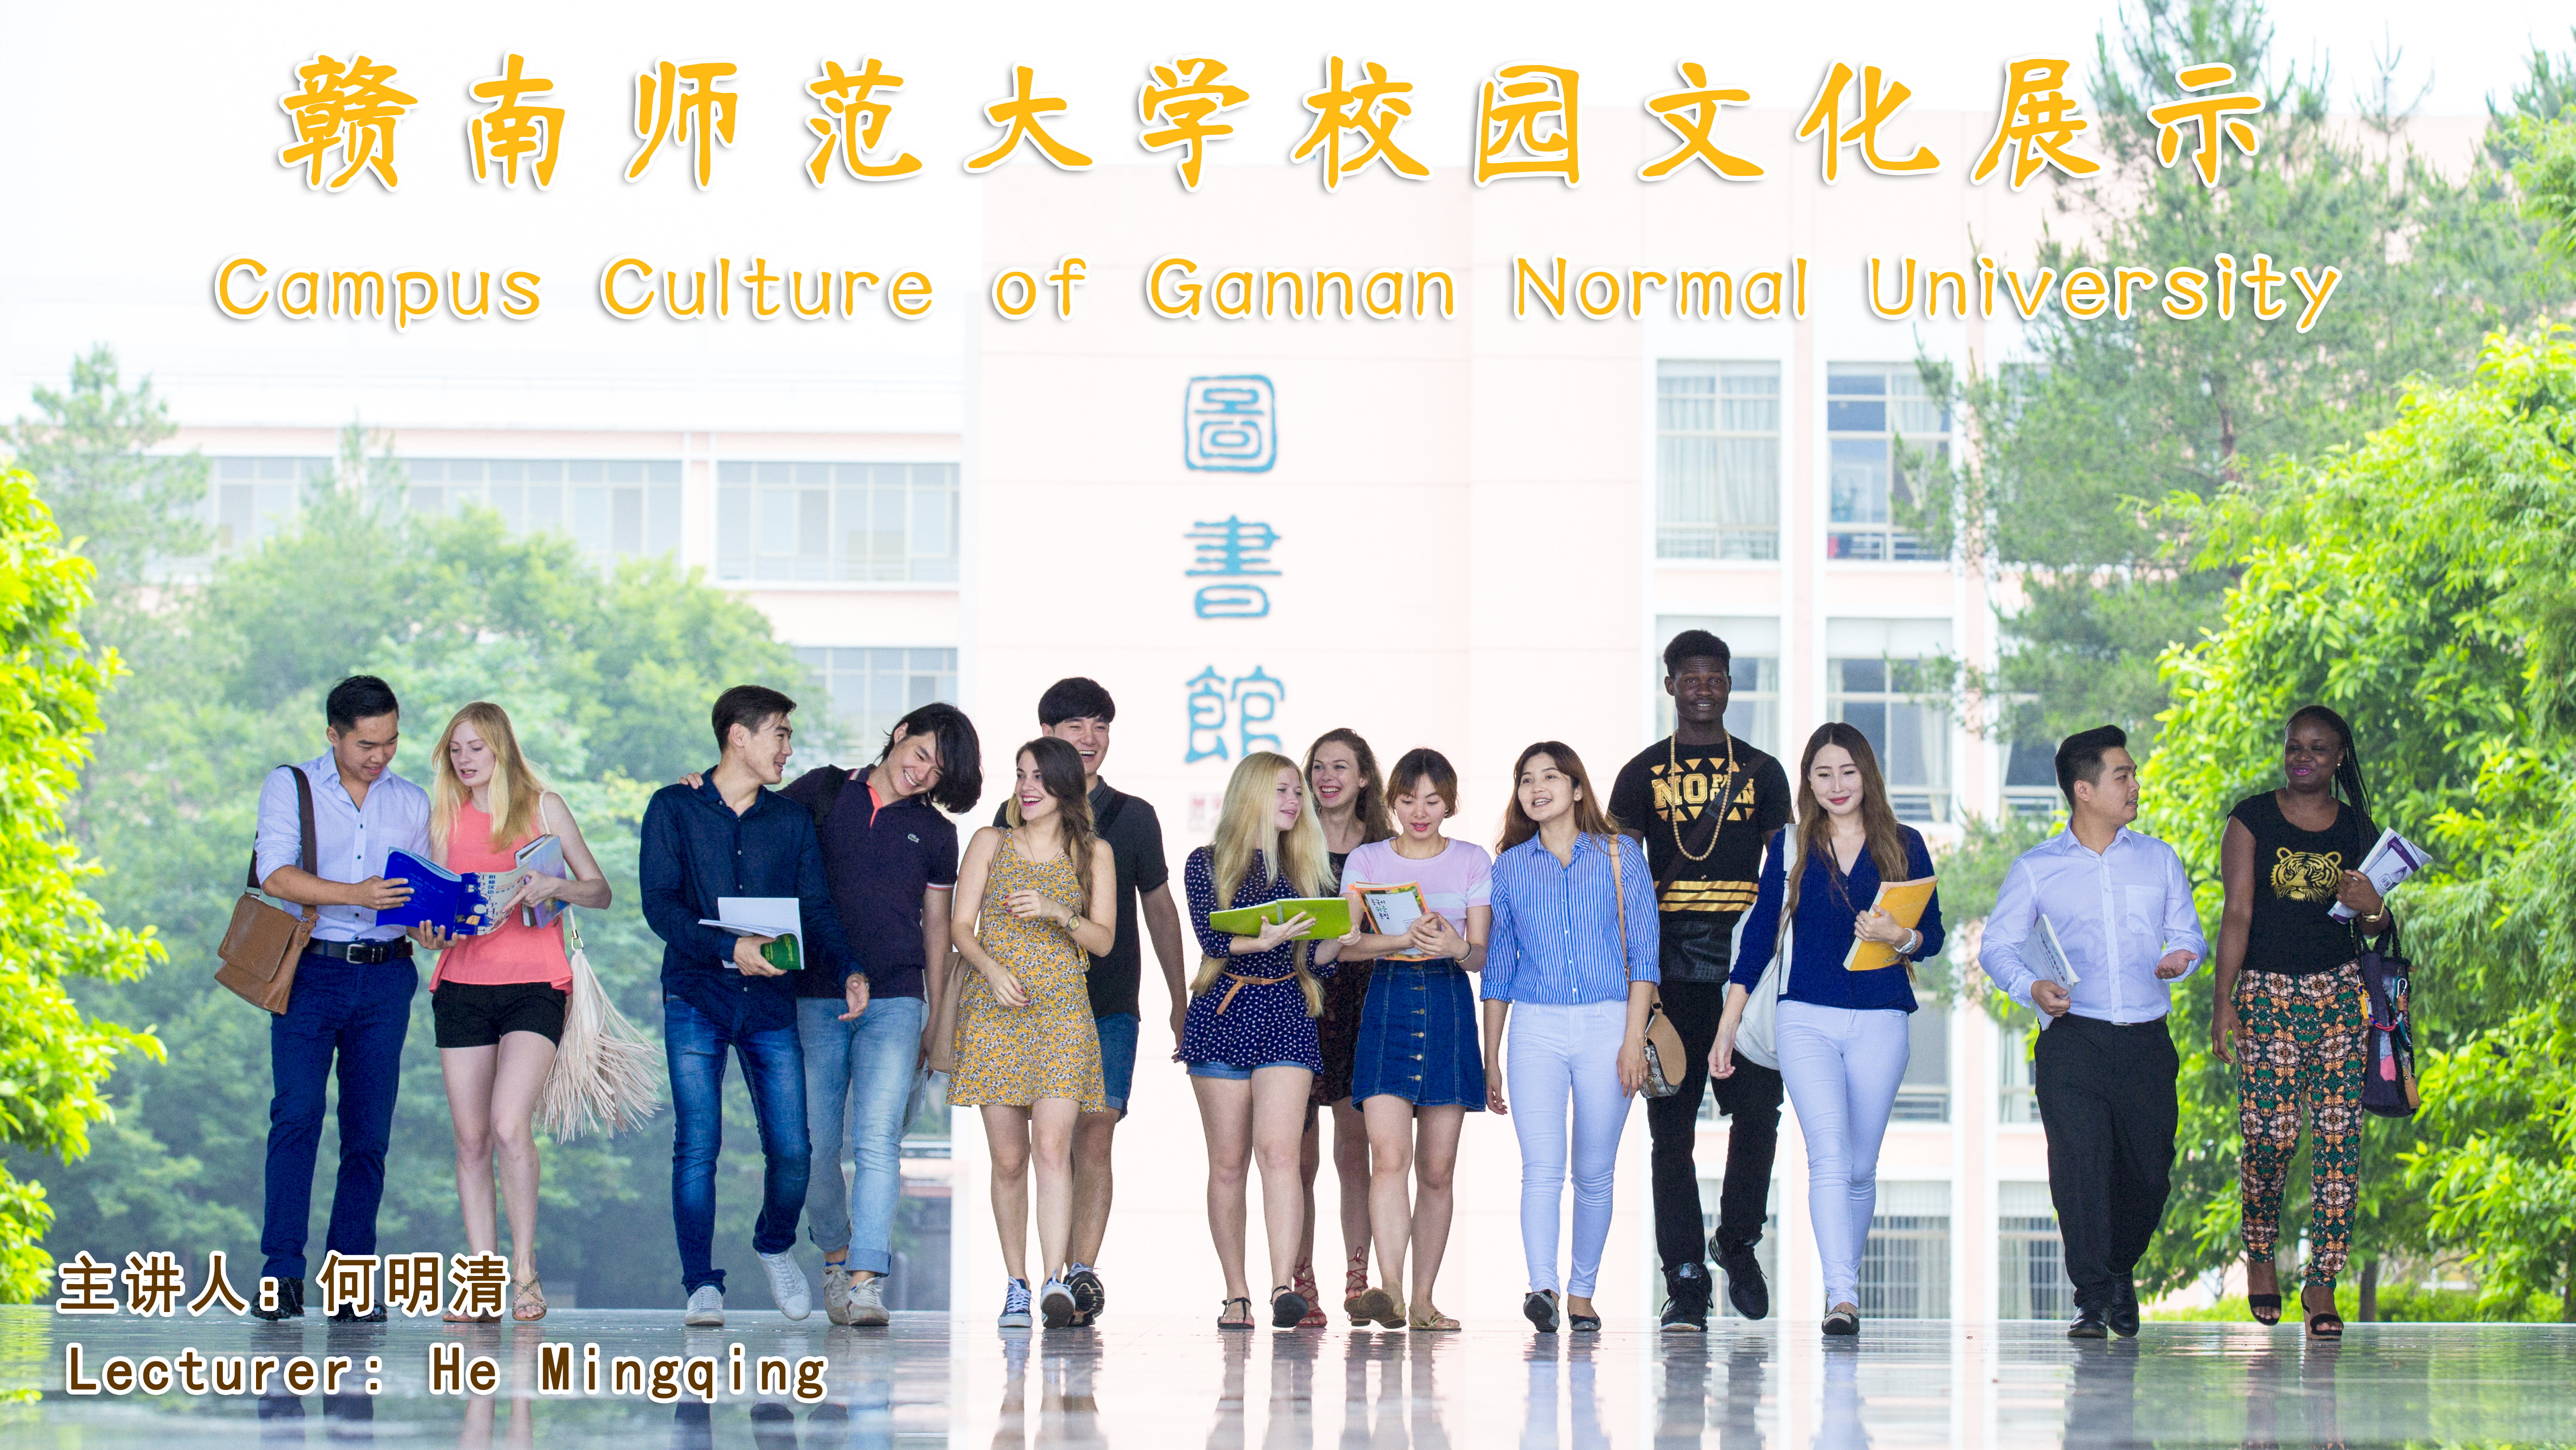 Campus Culture of Gannan Normal University